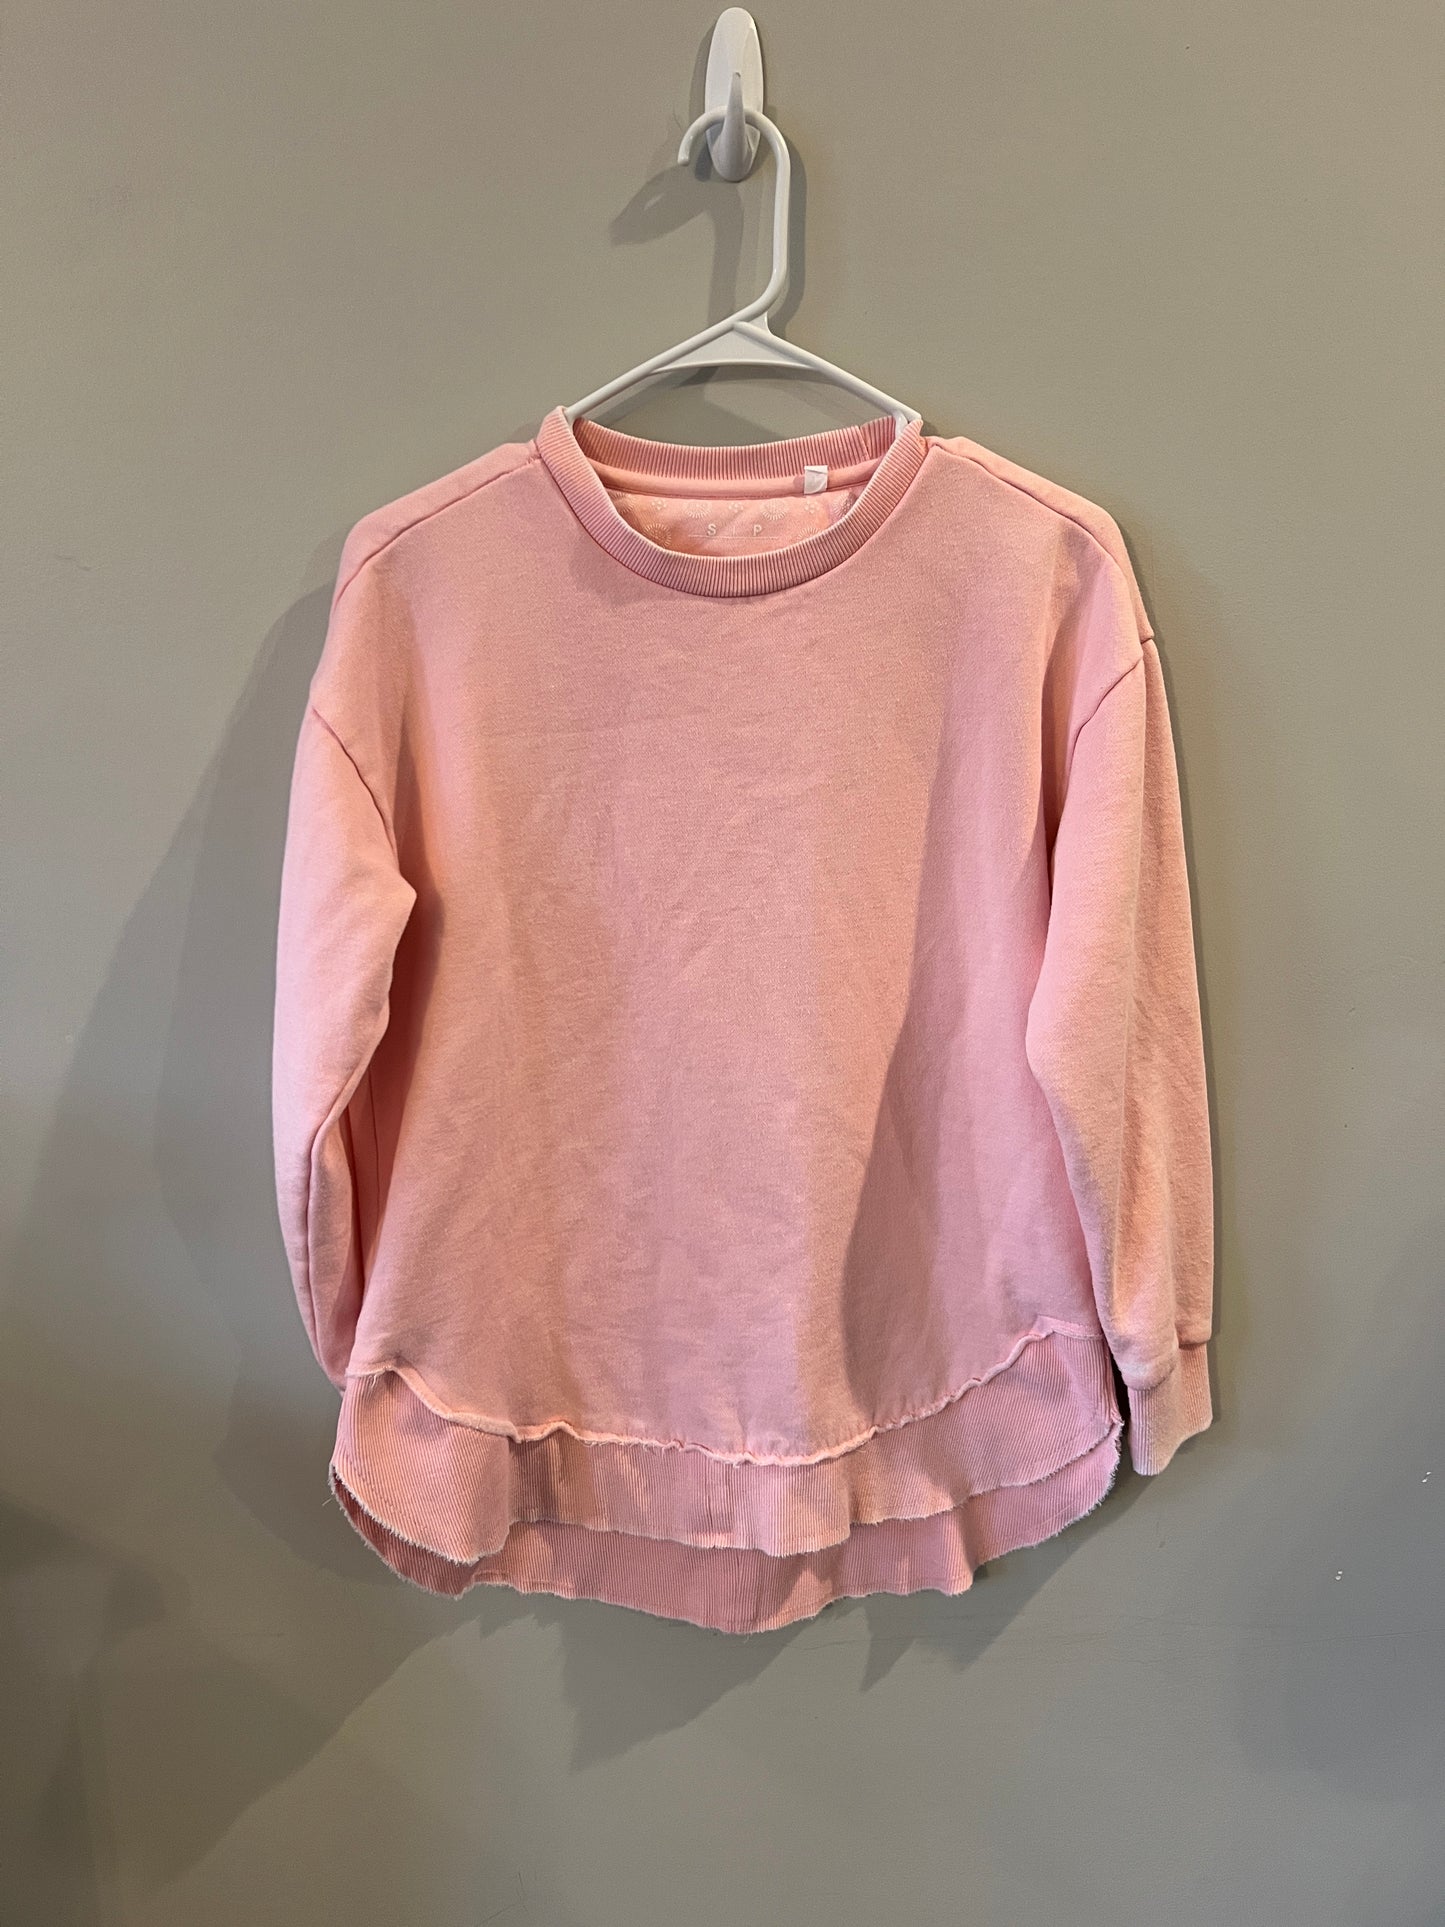 Women’s Small Distressed pink pullover sweatshirt- PPU 45044 (Liberty Twp)